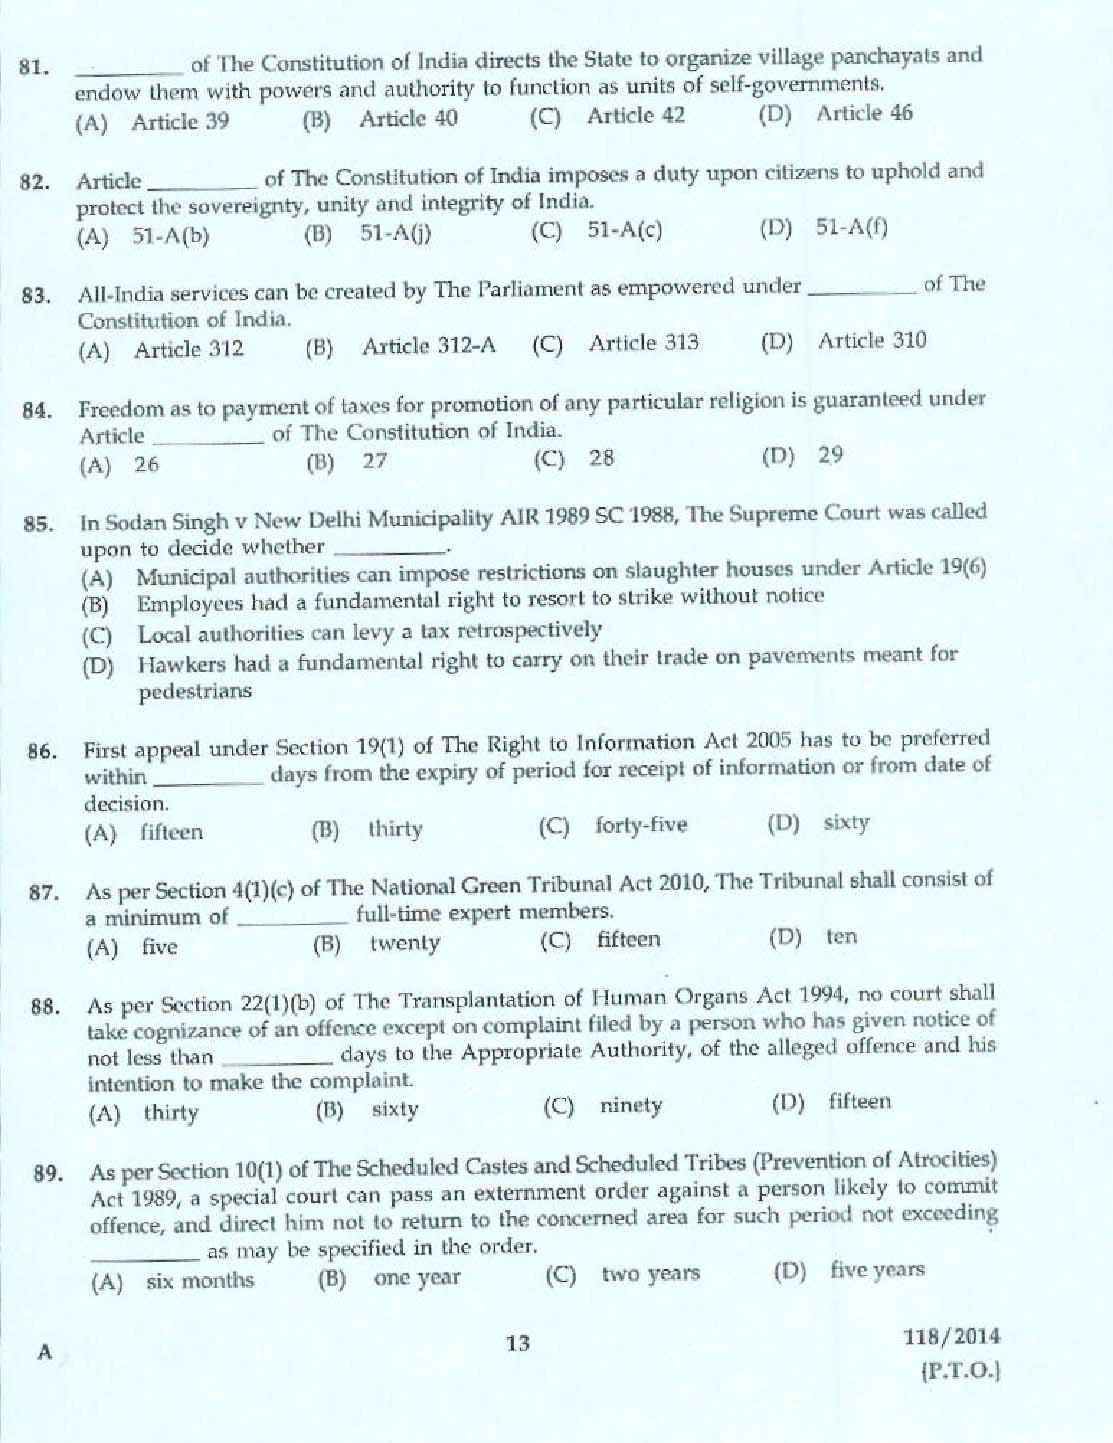 KPSC Lecturer in Malayalam Exam 2014 Code 1182014 11